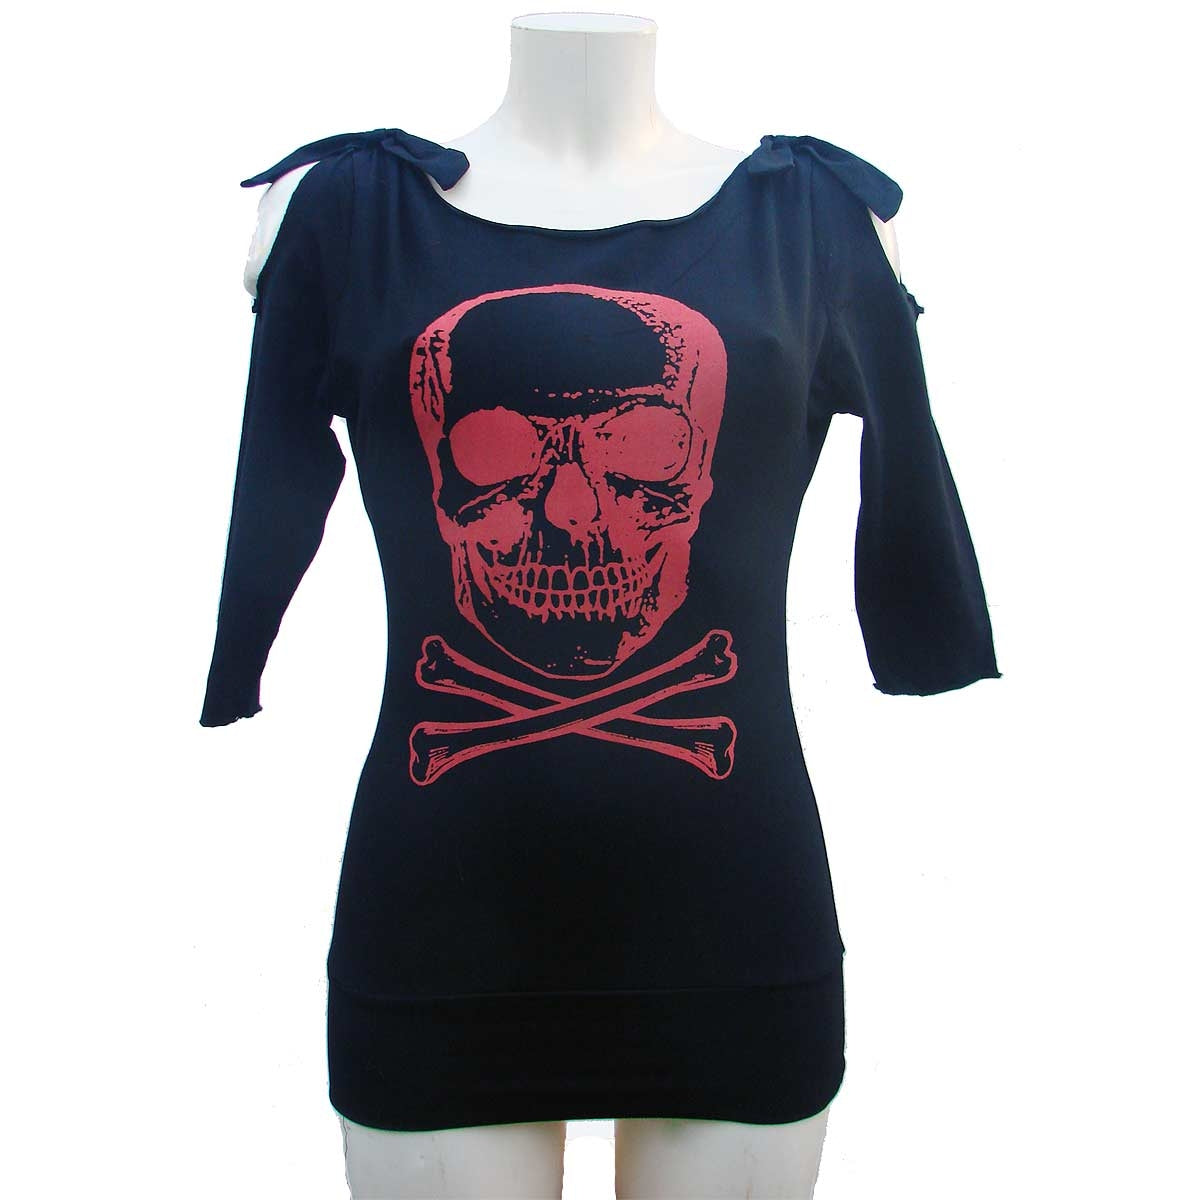 Woman's top t-shirt Black Skull Zoe